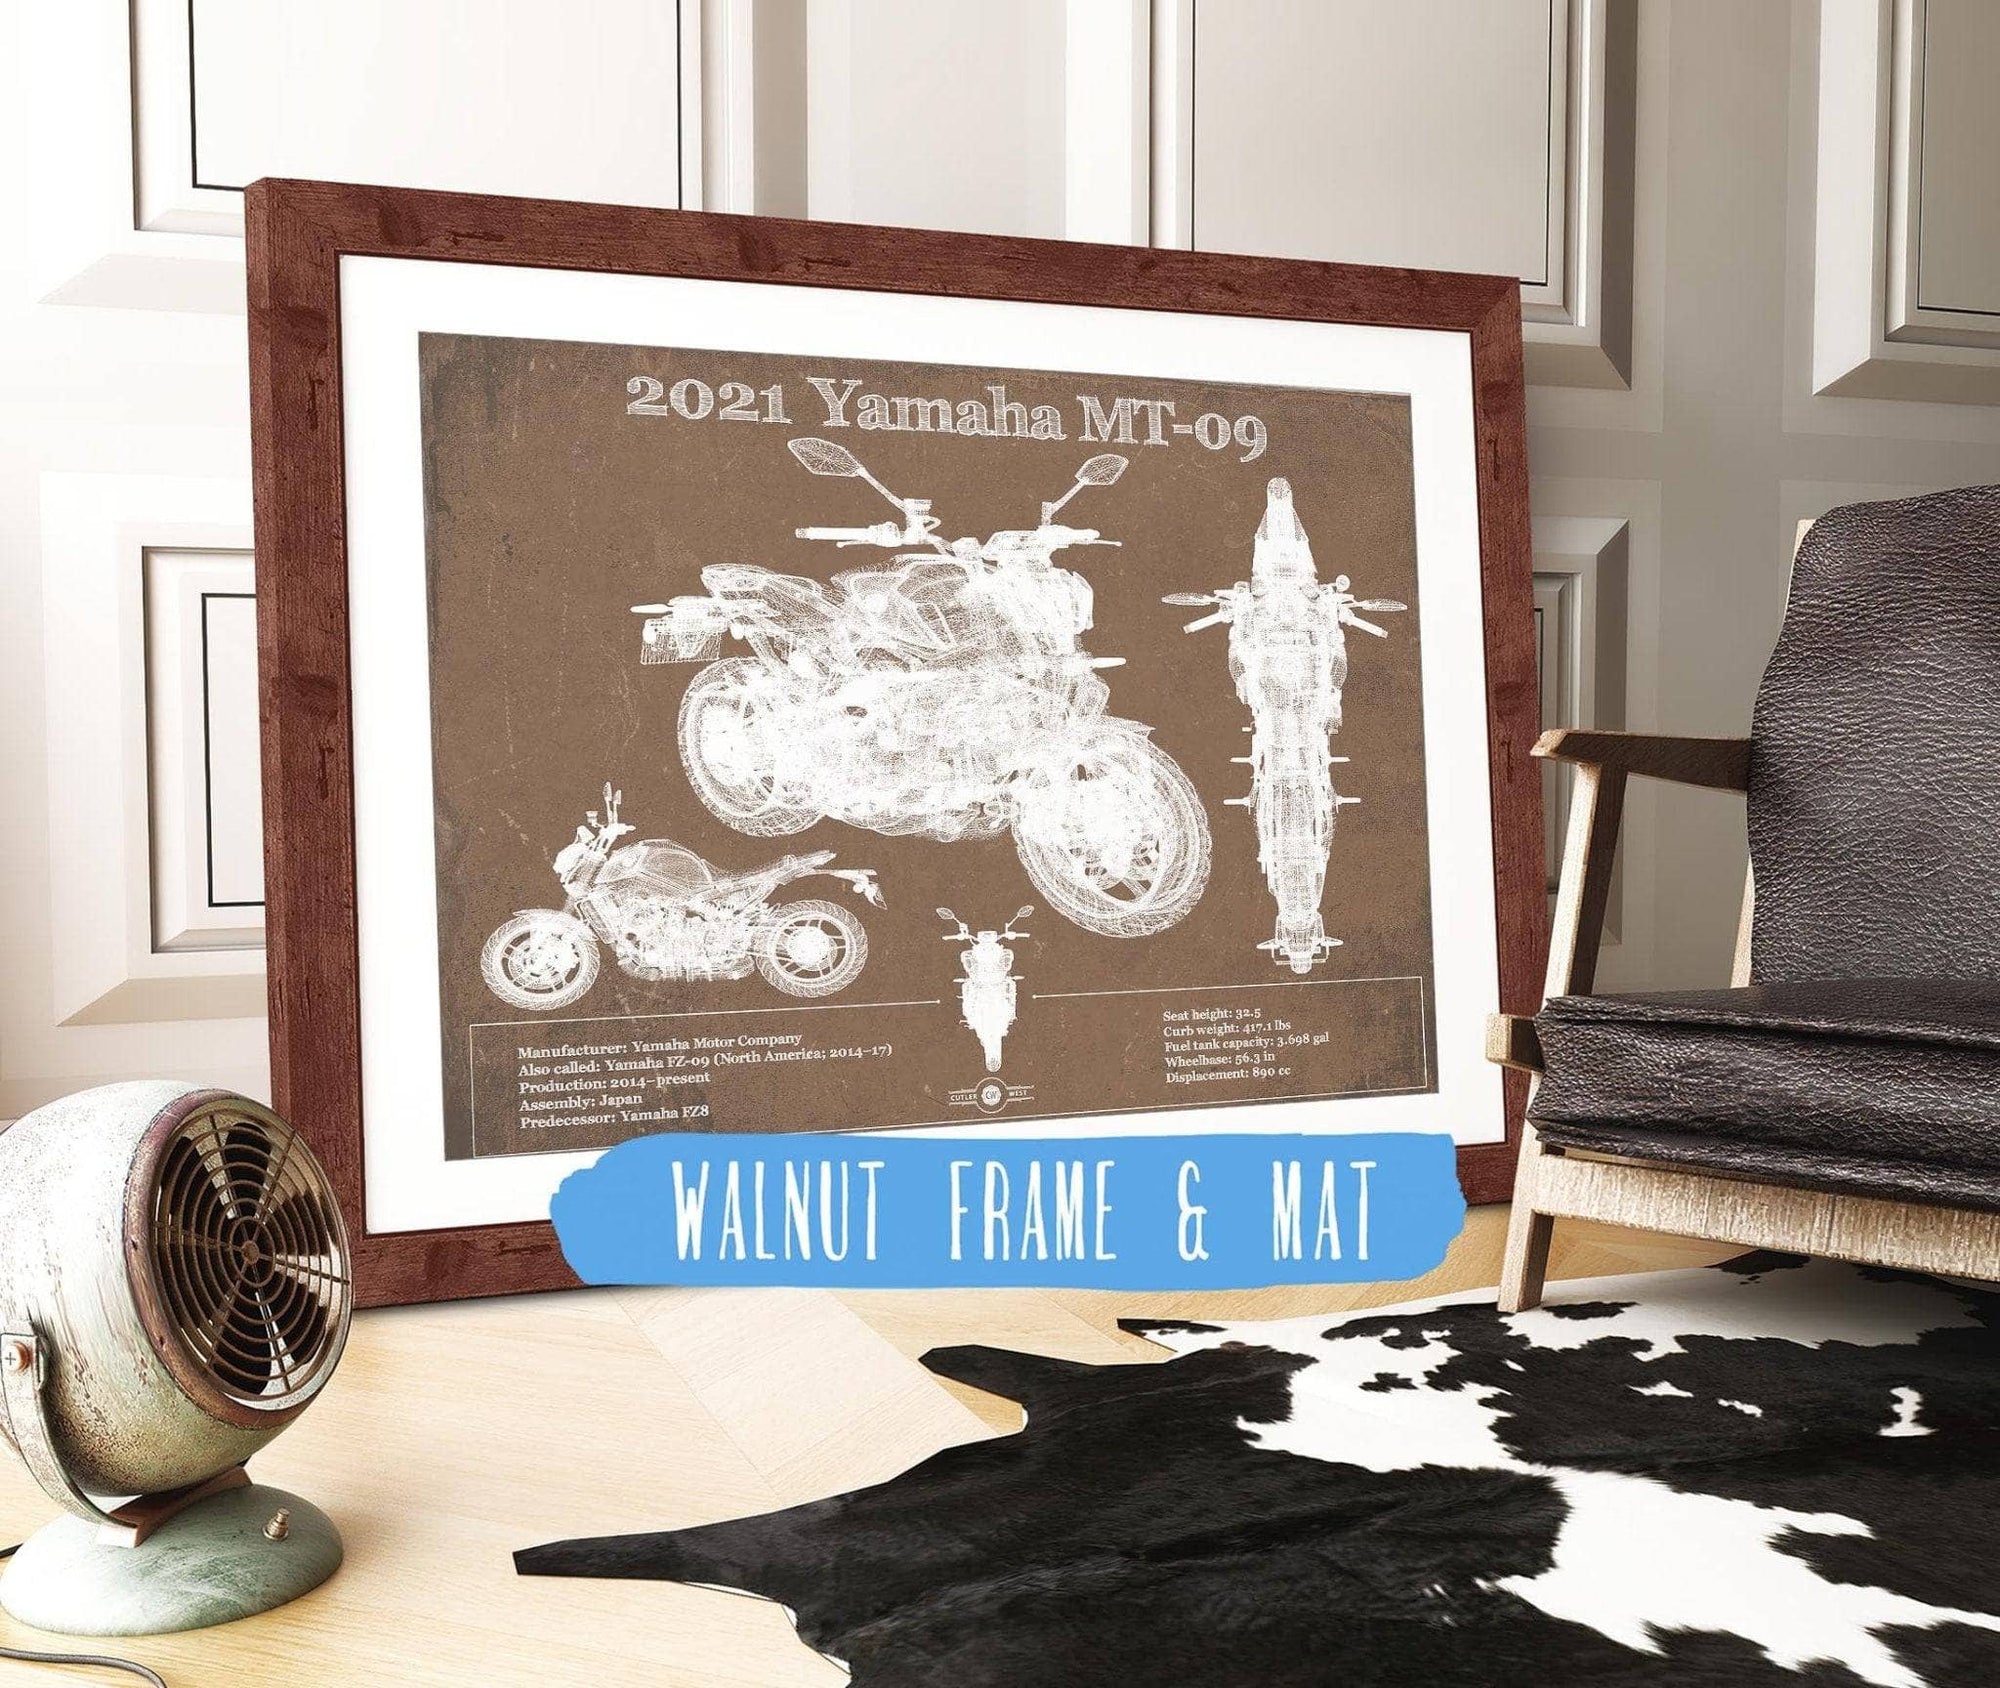 Cutler West 14" x 11" / Walnut Frame & Mat 2021 Yamaha Mt 09 Vintage Blueprint Auto Print 933311146_37323